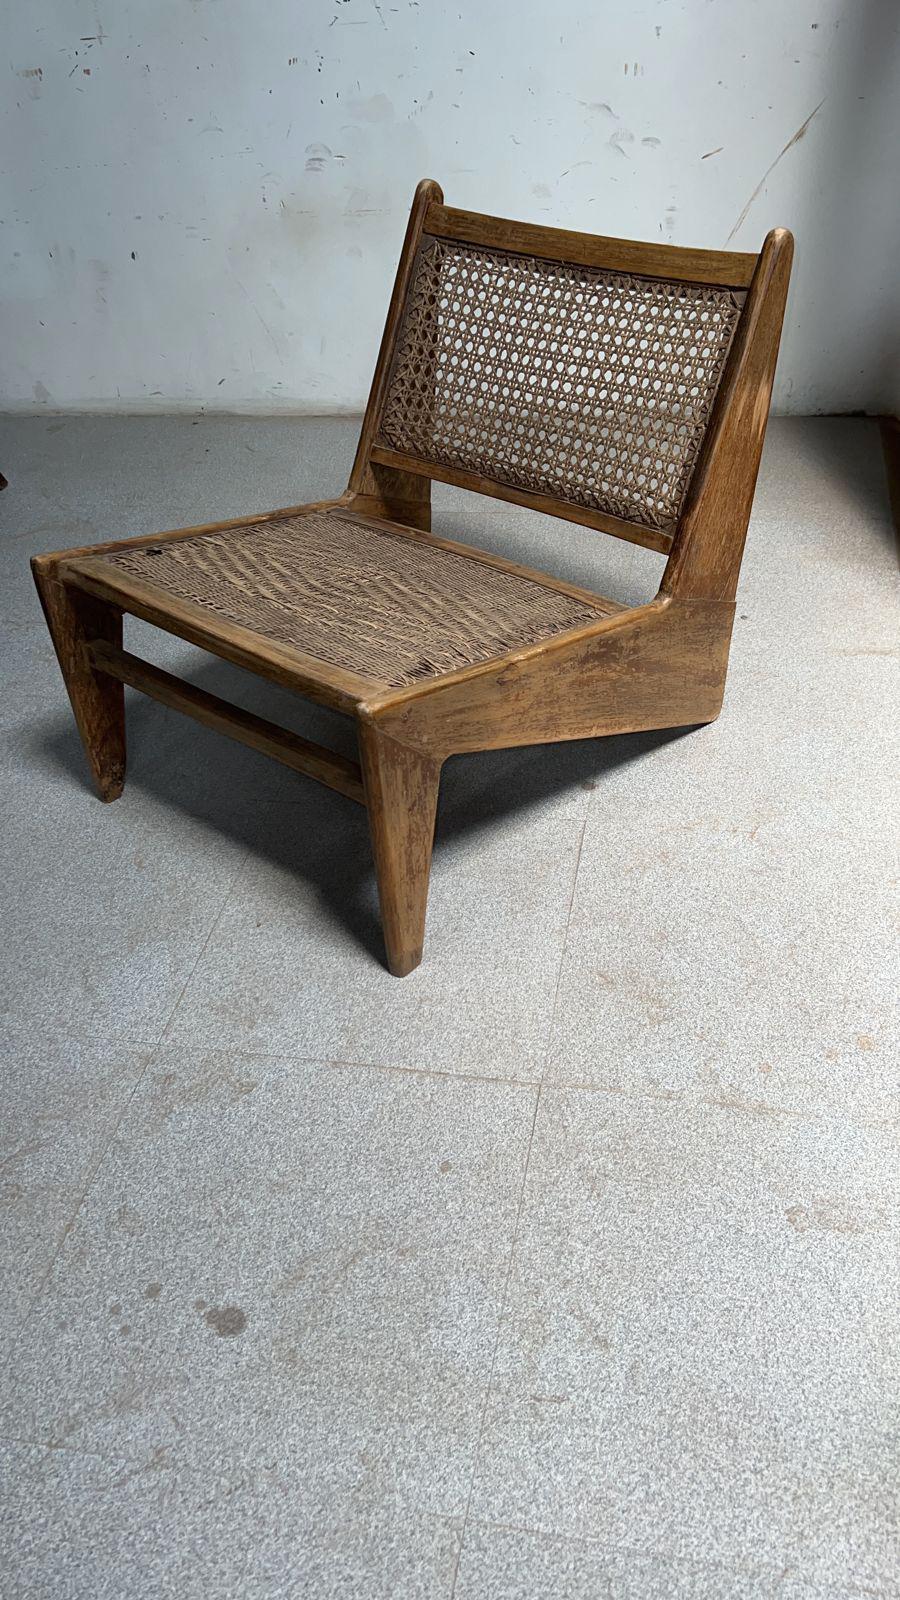 chandigarh chair